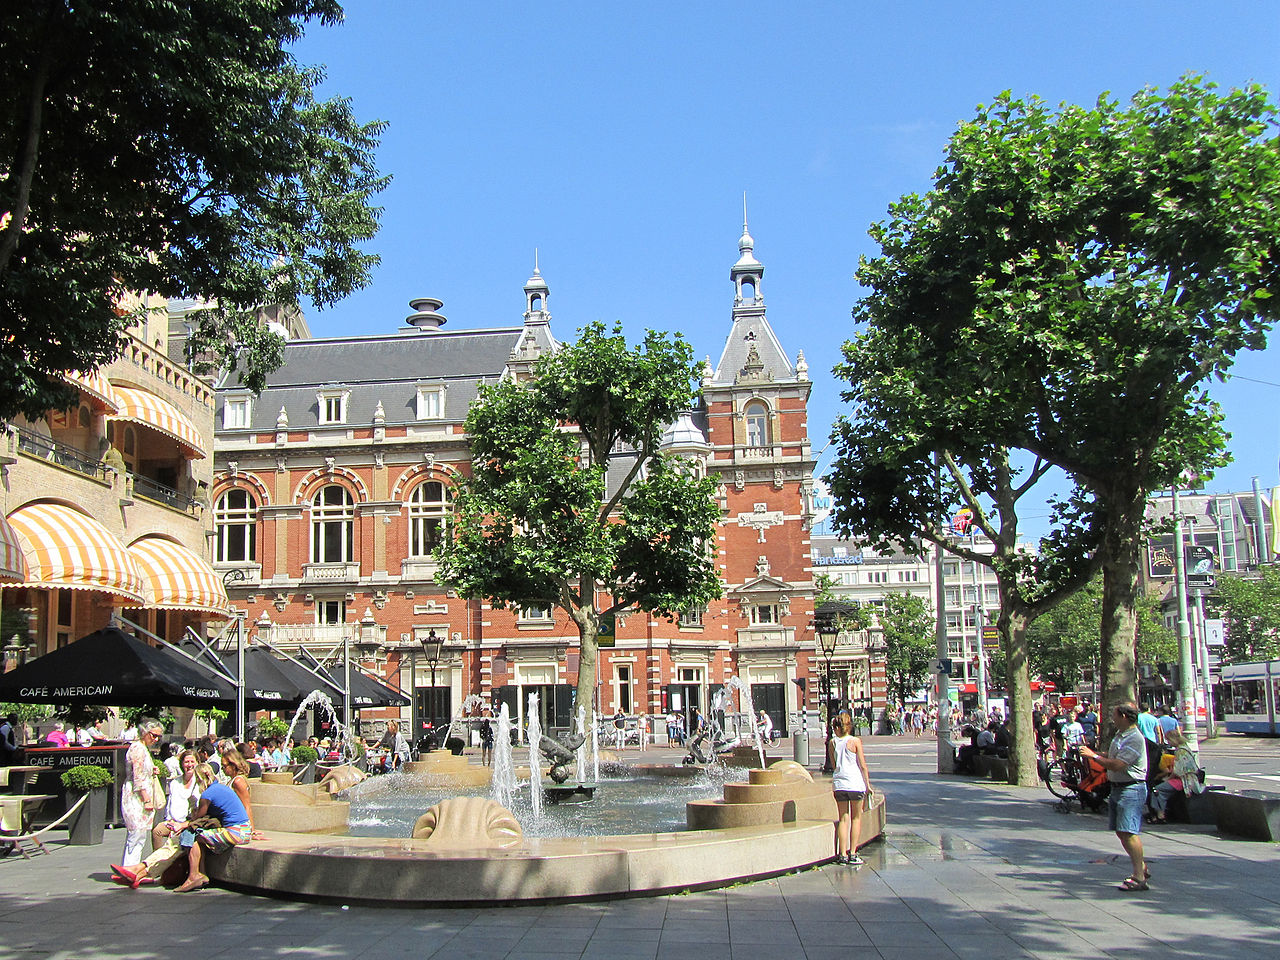 Leidseplein square